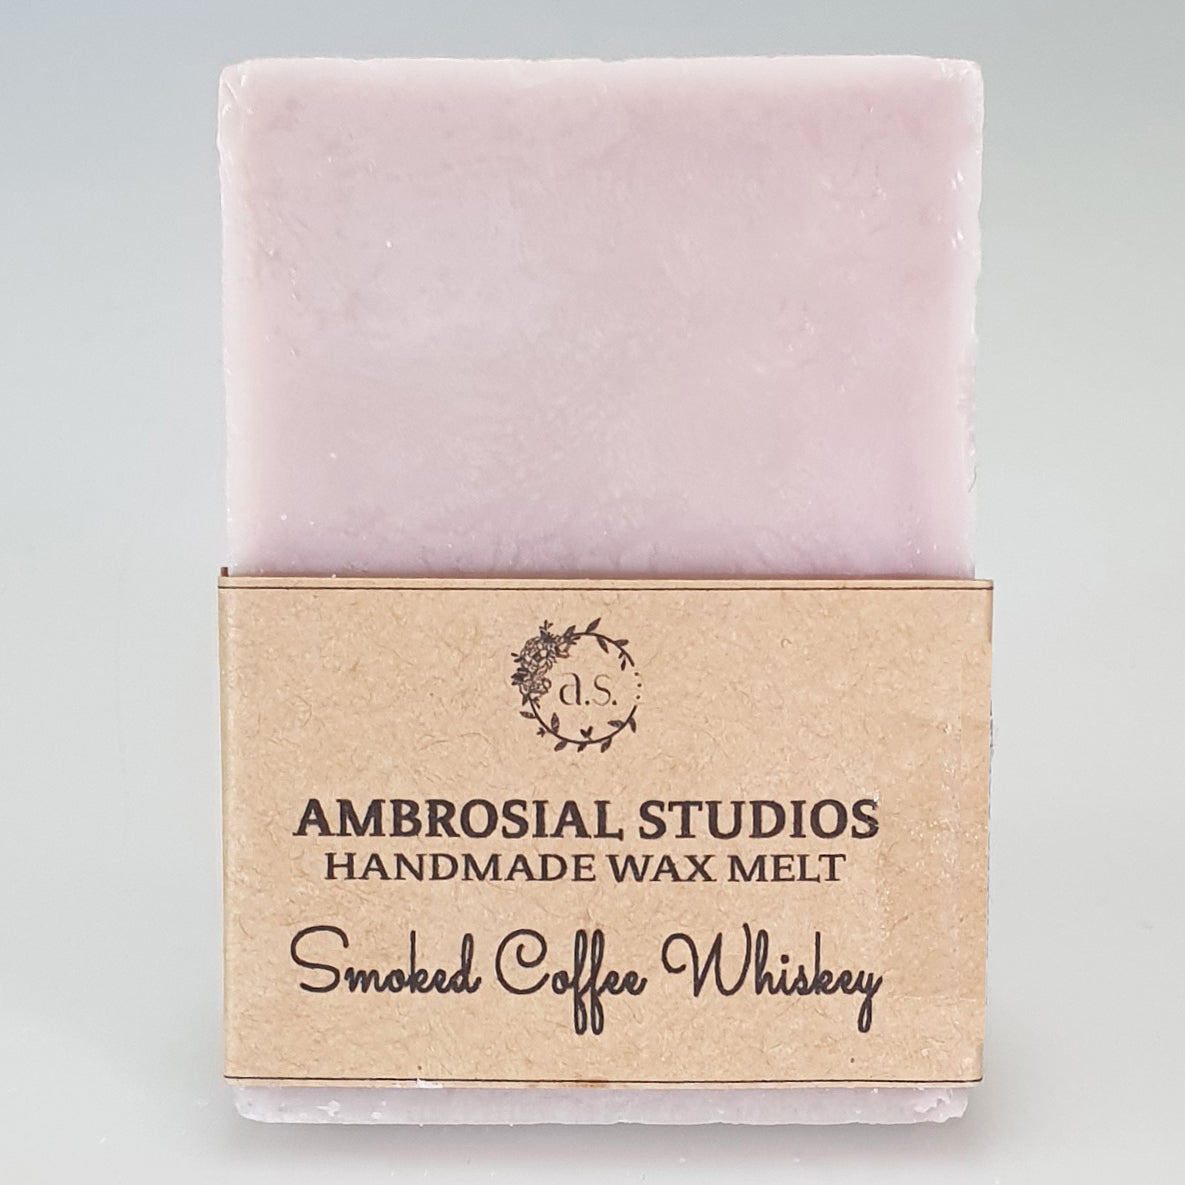 Ambrosial Studios - Handmade Wax Melt - Smoked Coffee Whiskey